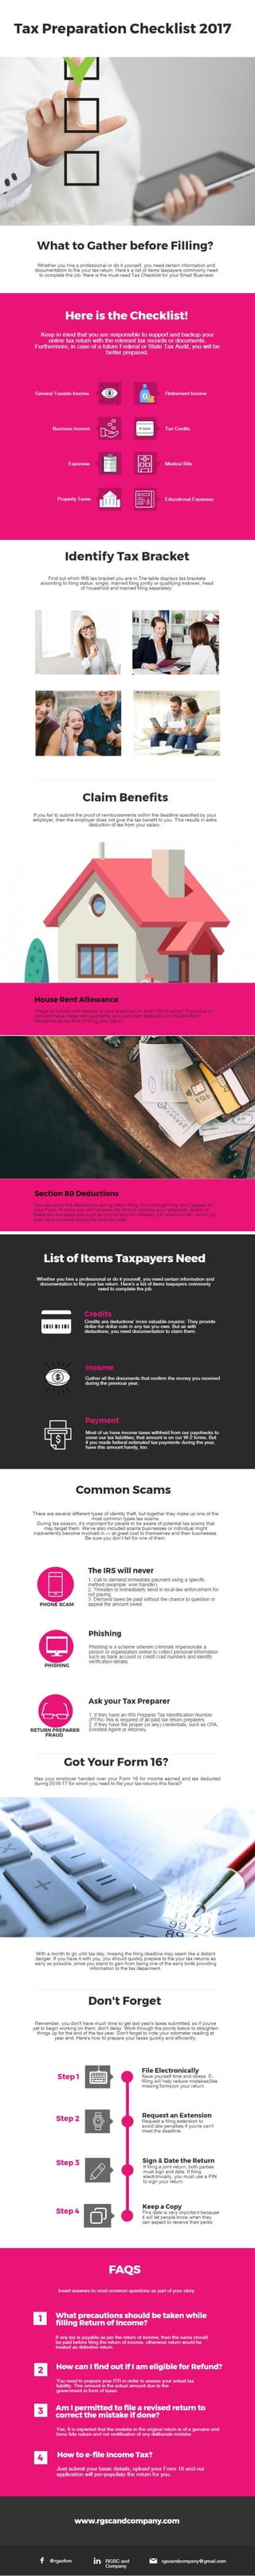 Tax Preparation Checklist 2017